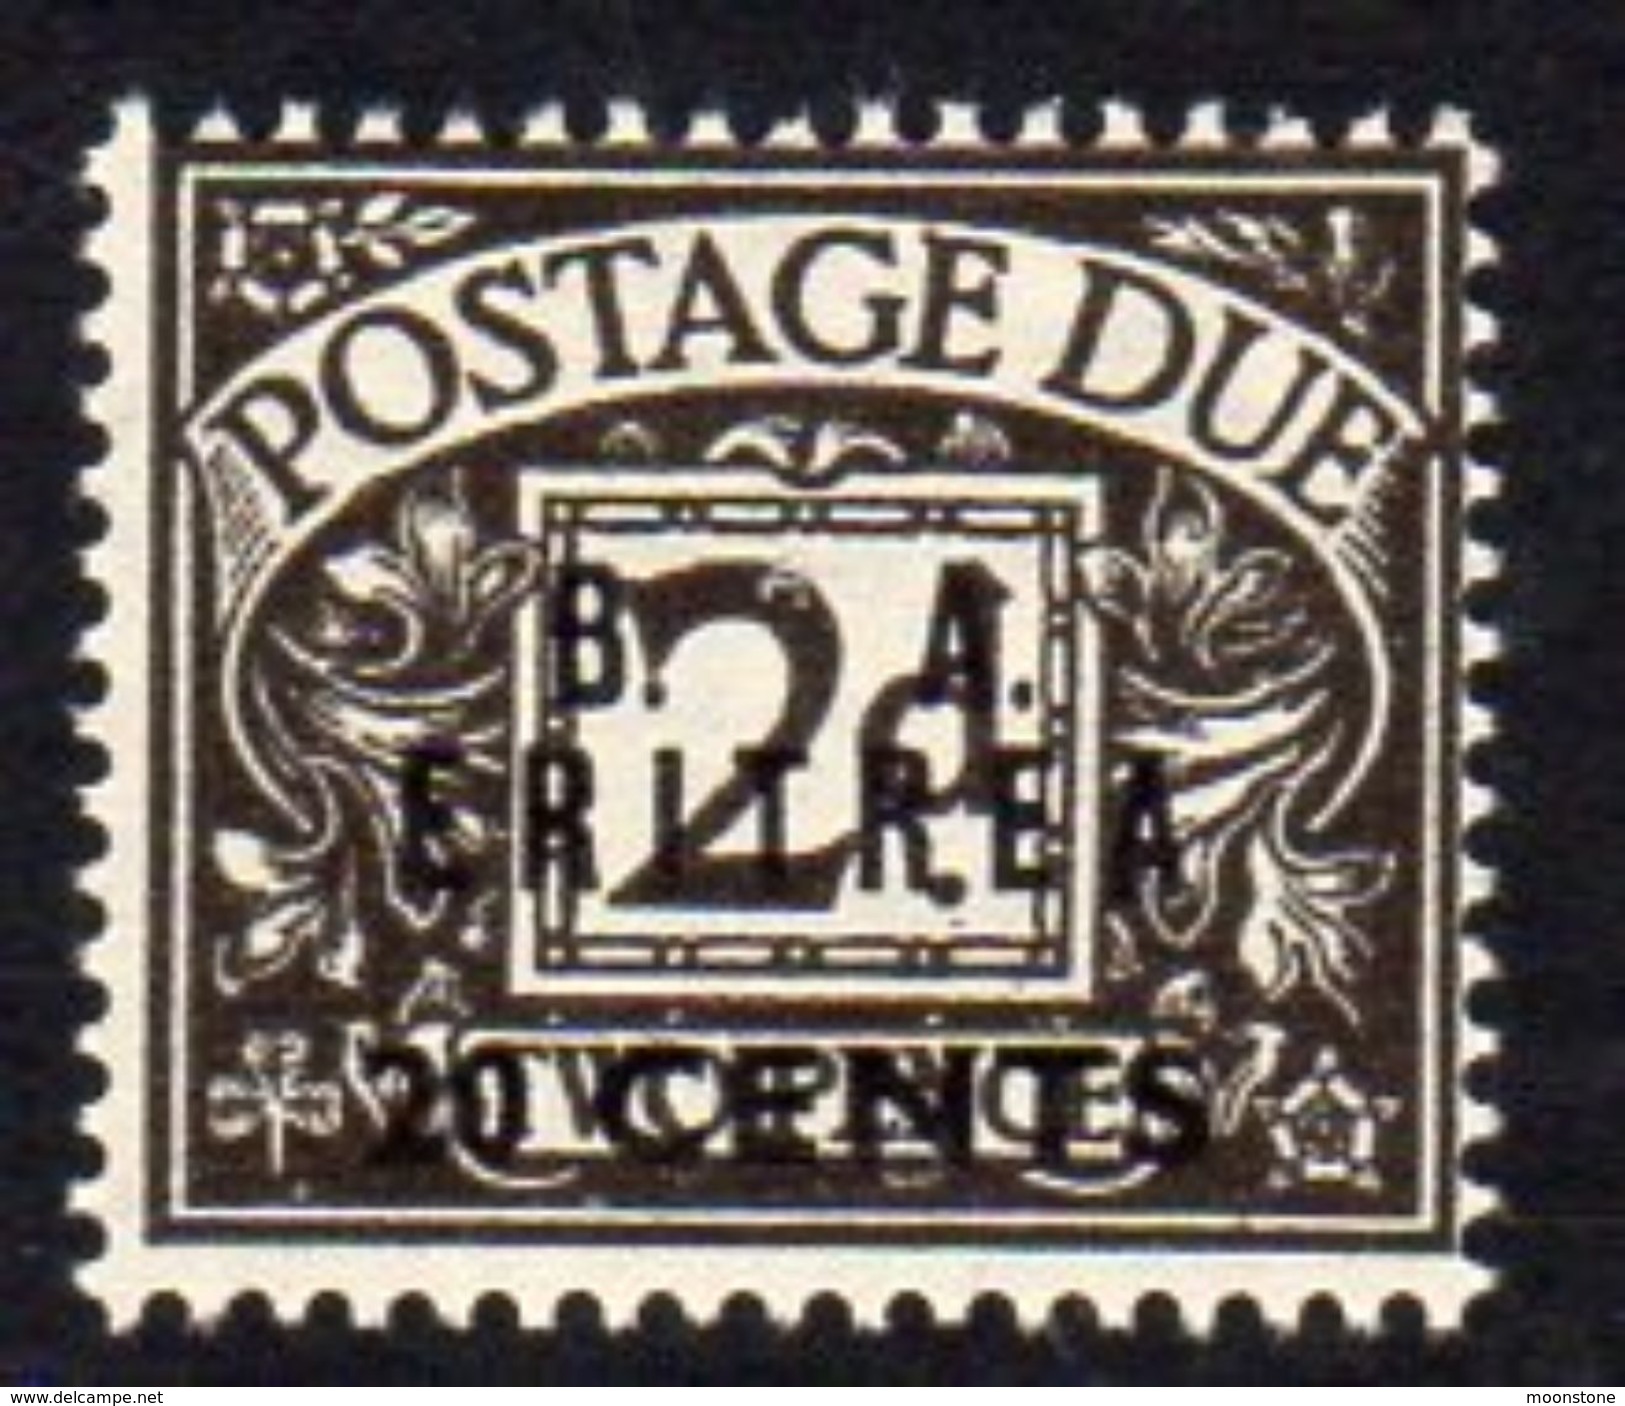 BOIC, BA Eritrea 1950 20c. On 2d Postage Due Overprint On GB, Hinged Mint, SG ED8 (A) - Eritrea